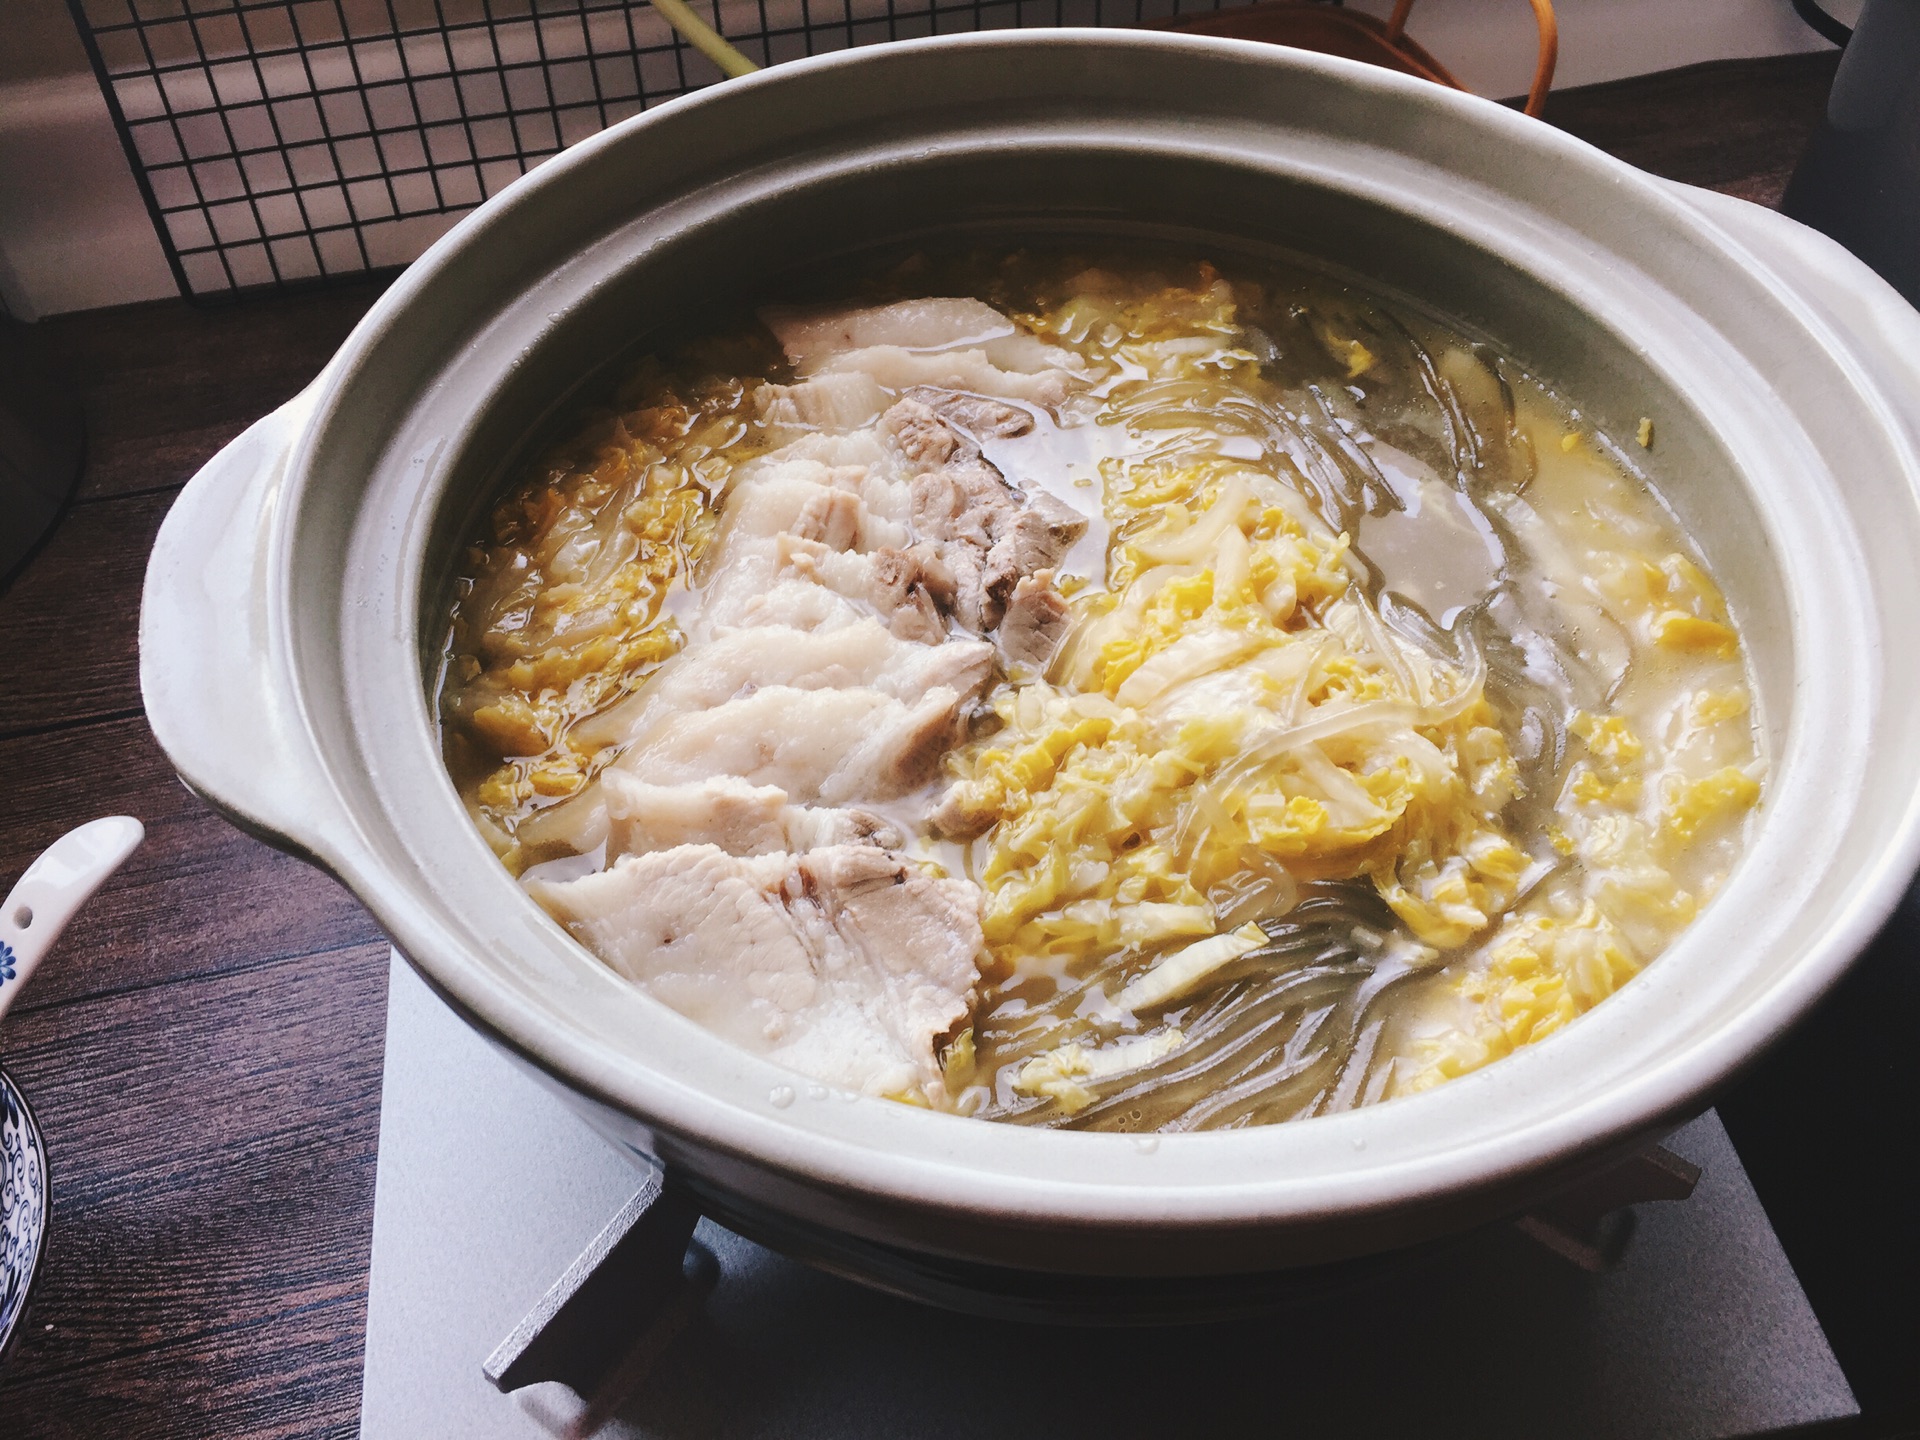 “砂锅酸菜”受欢迎的2种吃法，搭配丸子和白肉，酸爽开胃真下饭_哔哩哔哩 (゜-゜)つロ 干杯~-bilibili